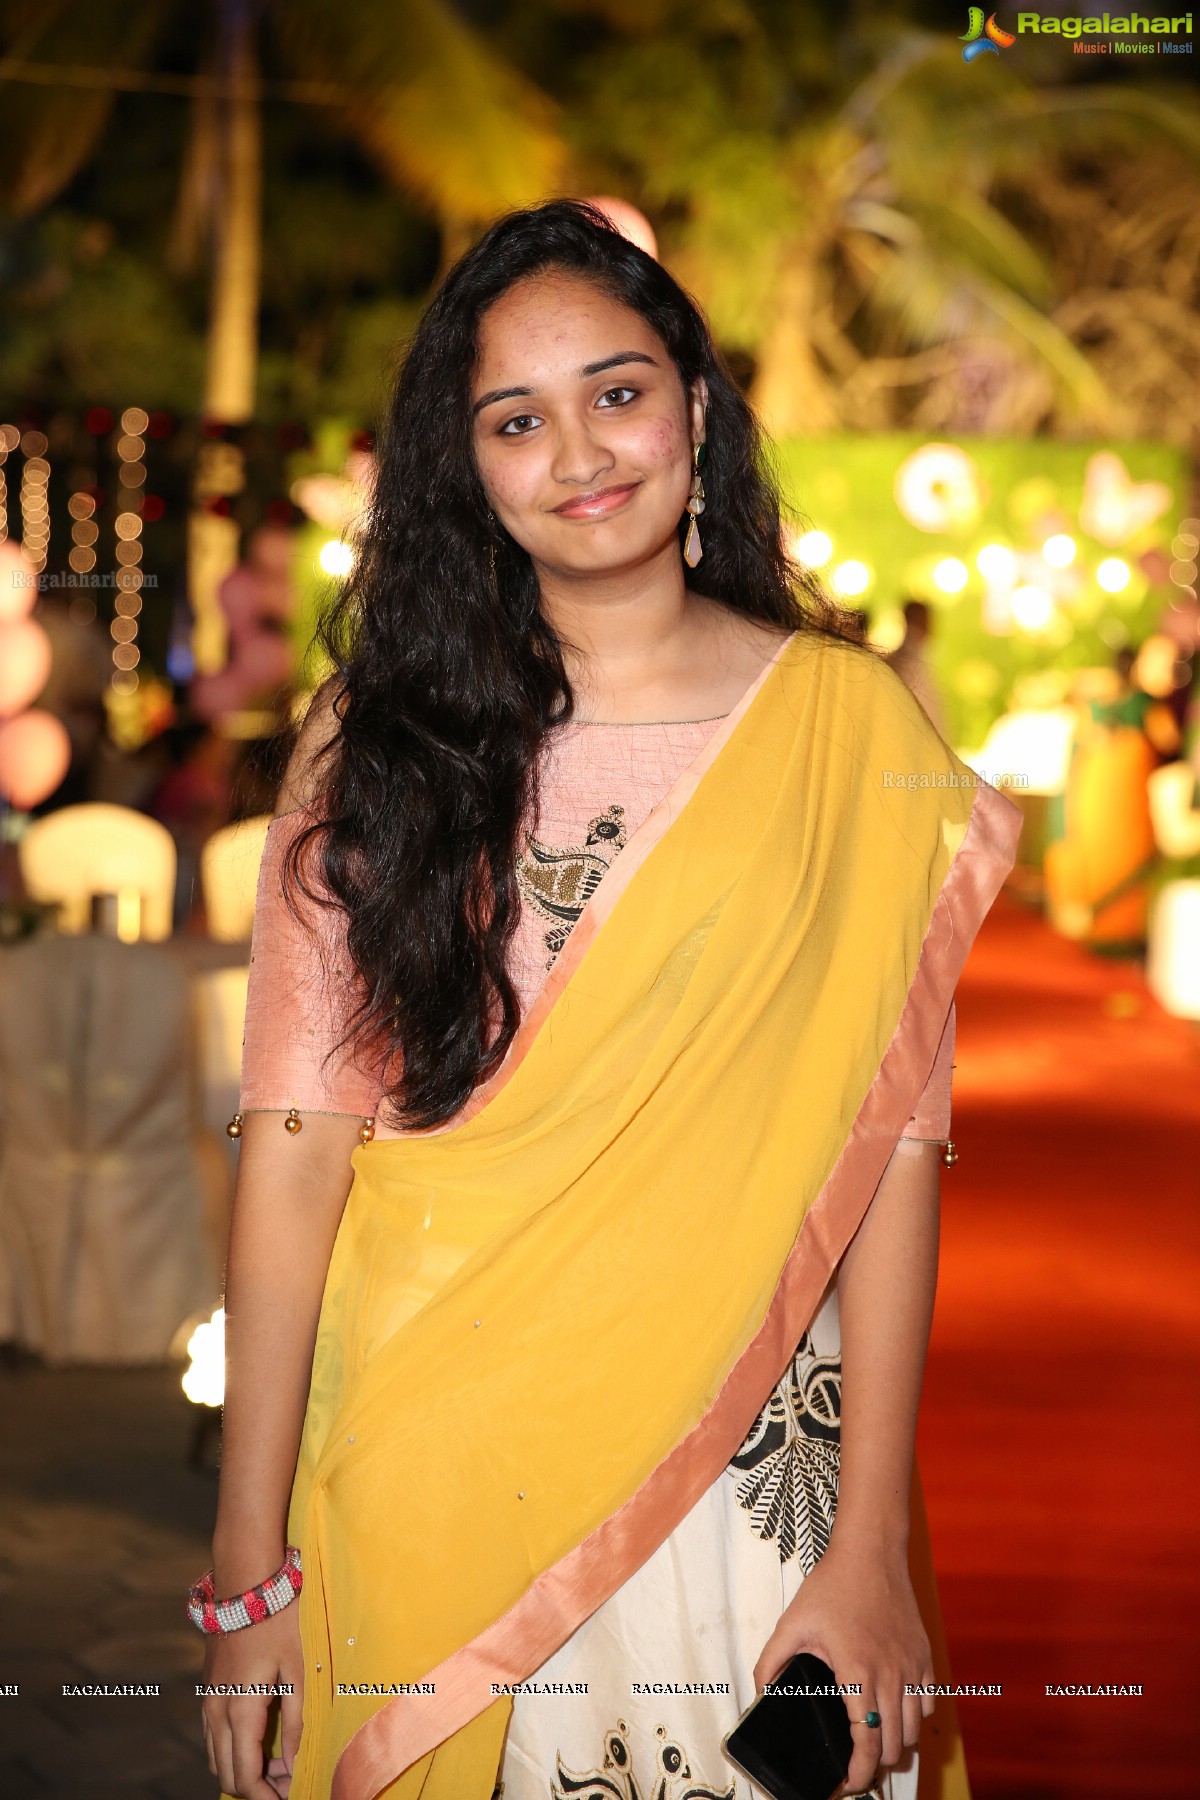 Vamsi Deepak & Swetchha's Daughter Anika's 1st Birthday Bash @ Banyan - N Convention